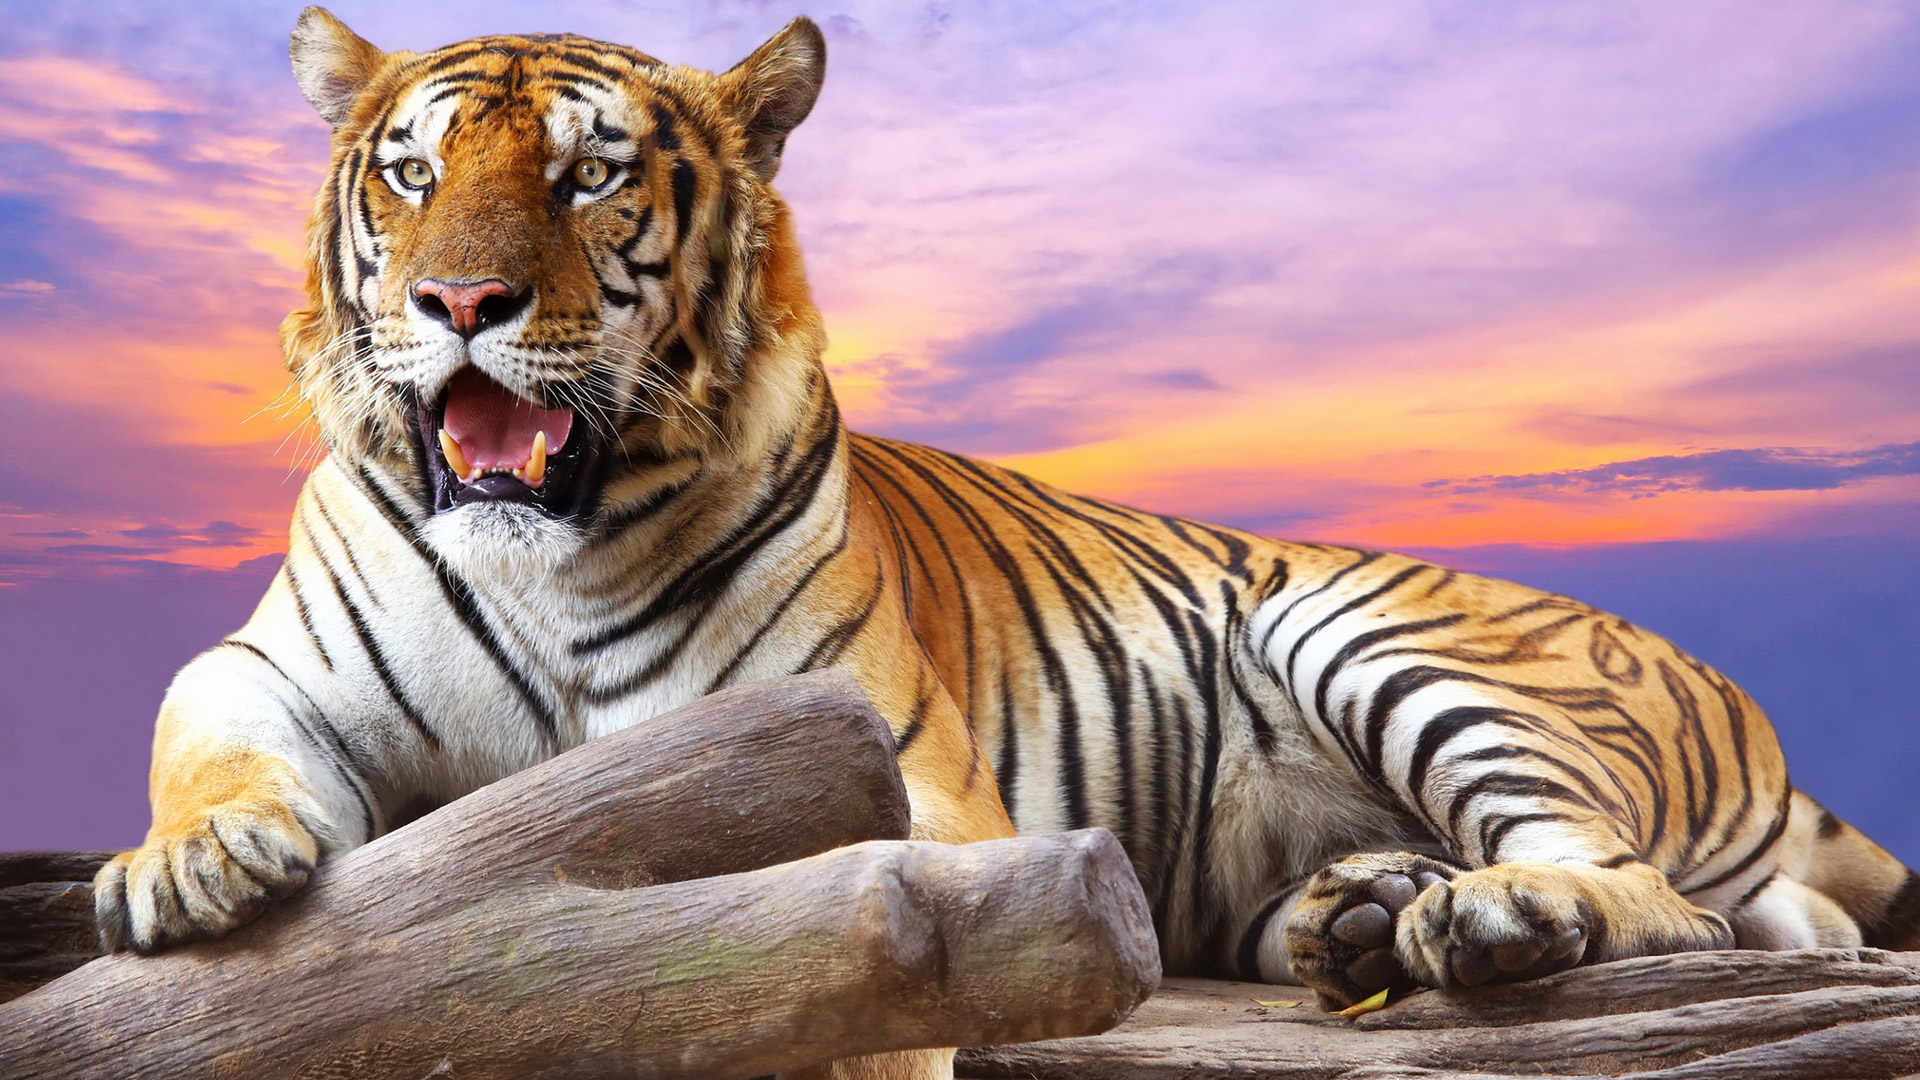 Tiger HD Wallpaper. Tiger HD Wallpaper Free. Tiger Wallpaper